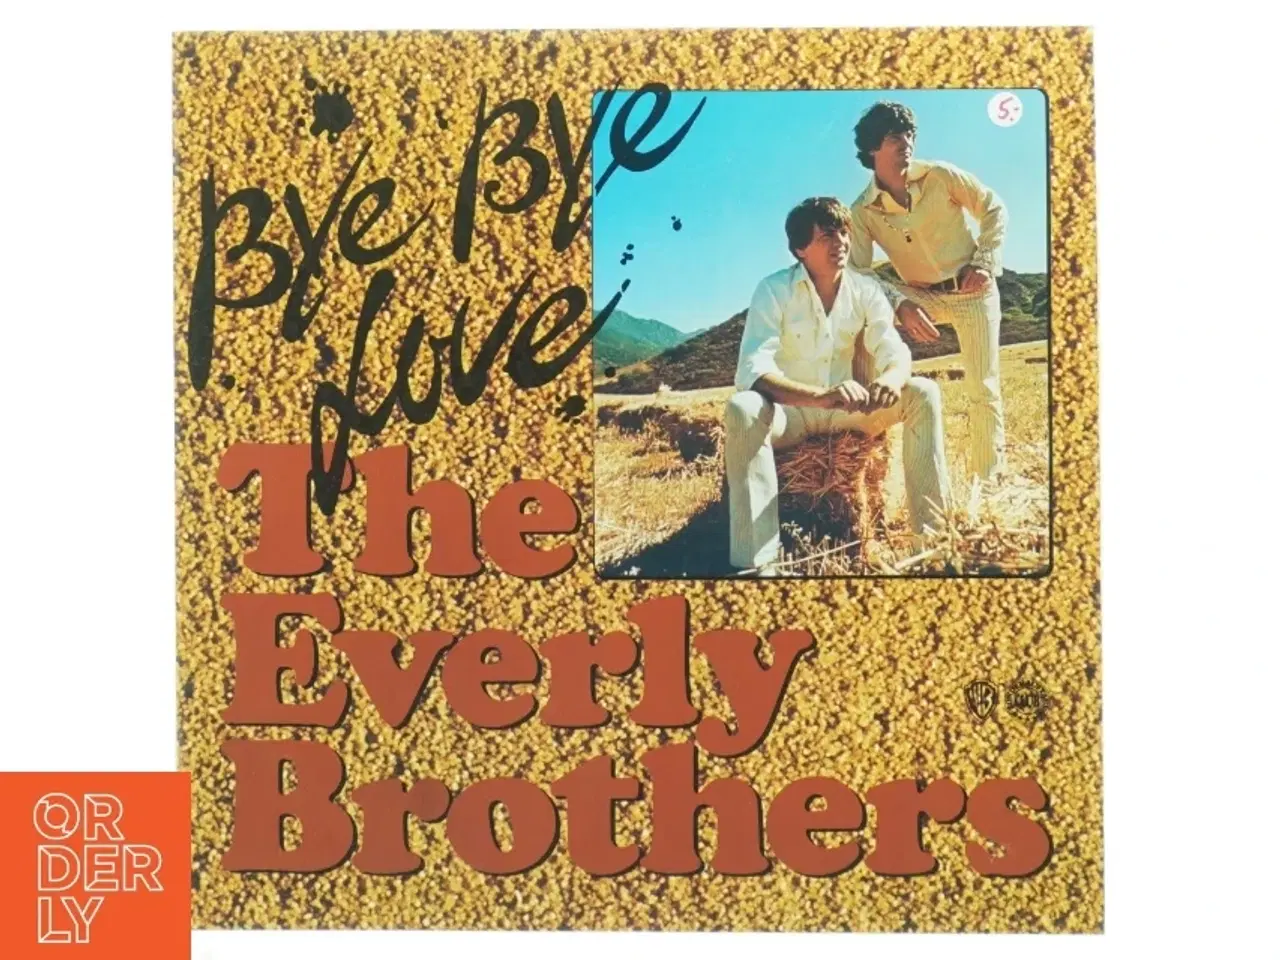 Billede 1 - The Everly Brothers - Bye Bye Love vinylplade fra Warner Bros. (str. 31 x 31 cm)